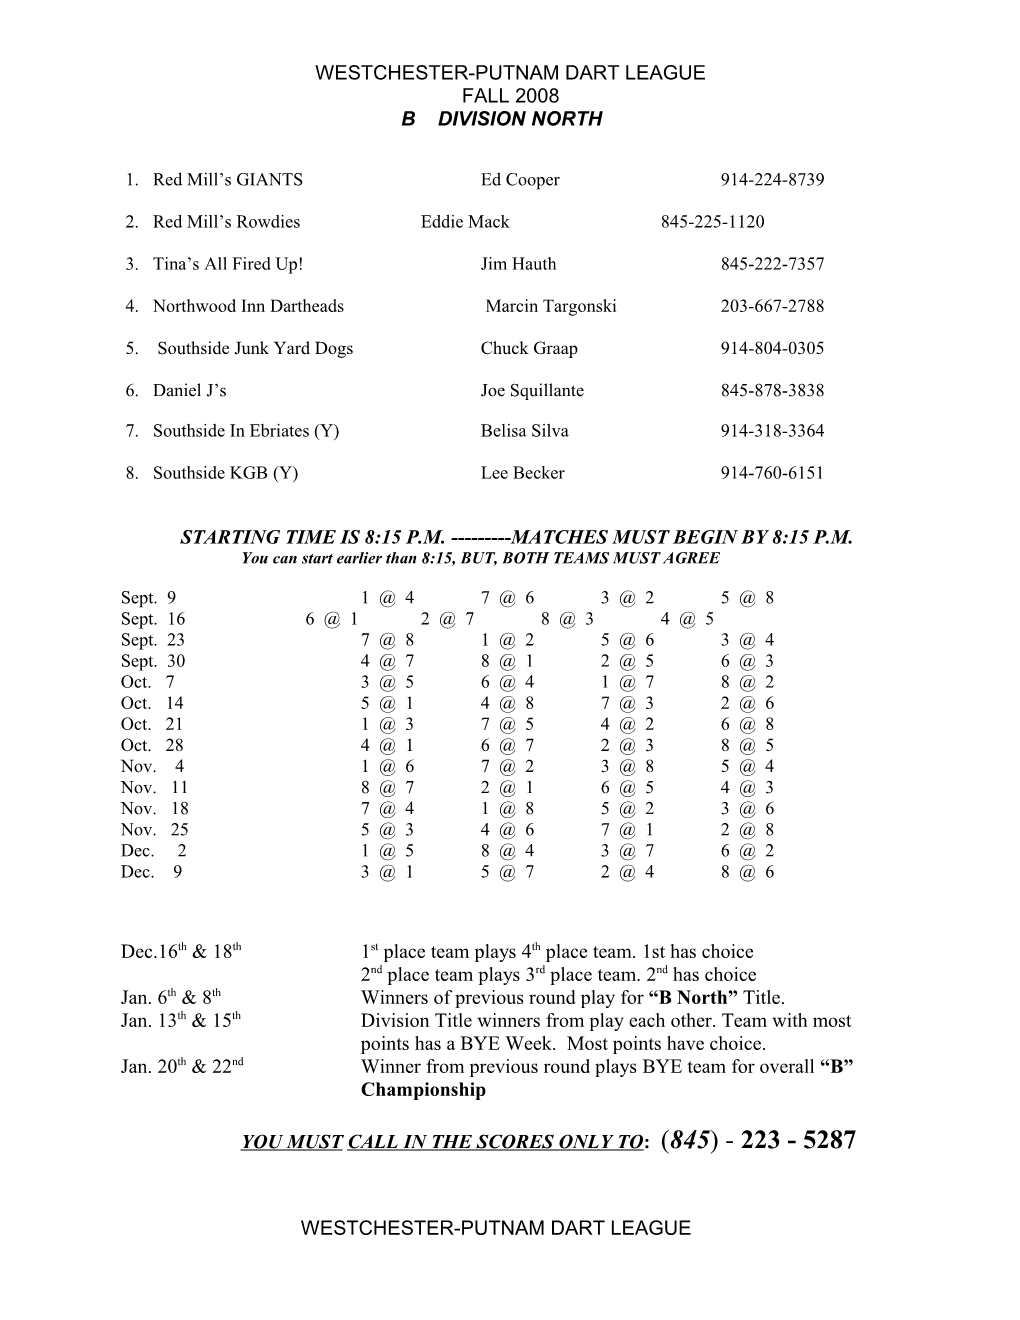 Westchester-Putnam Dart League s1